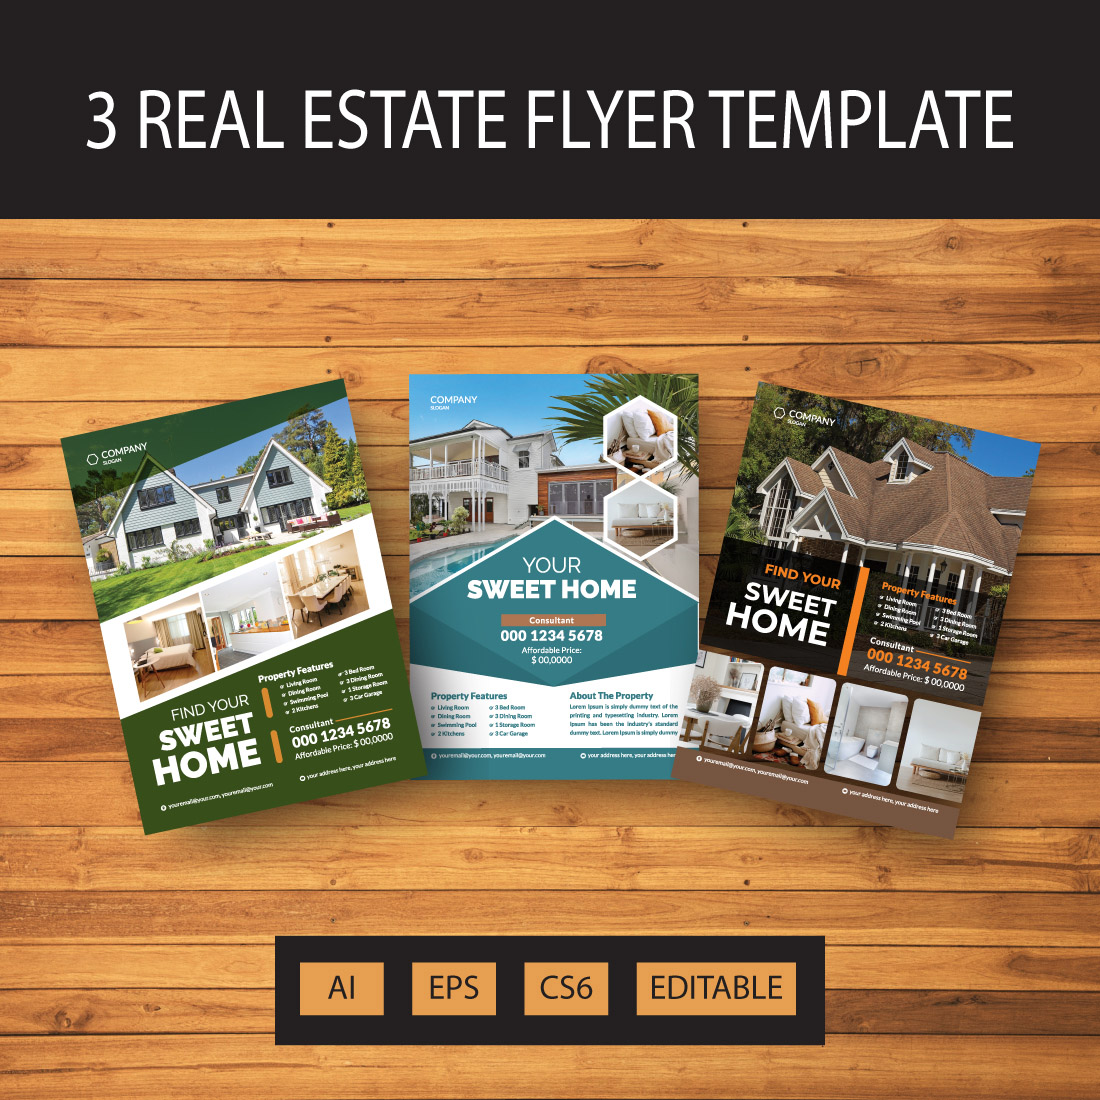 3 Real Estate Flyer Template Design cover image.